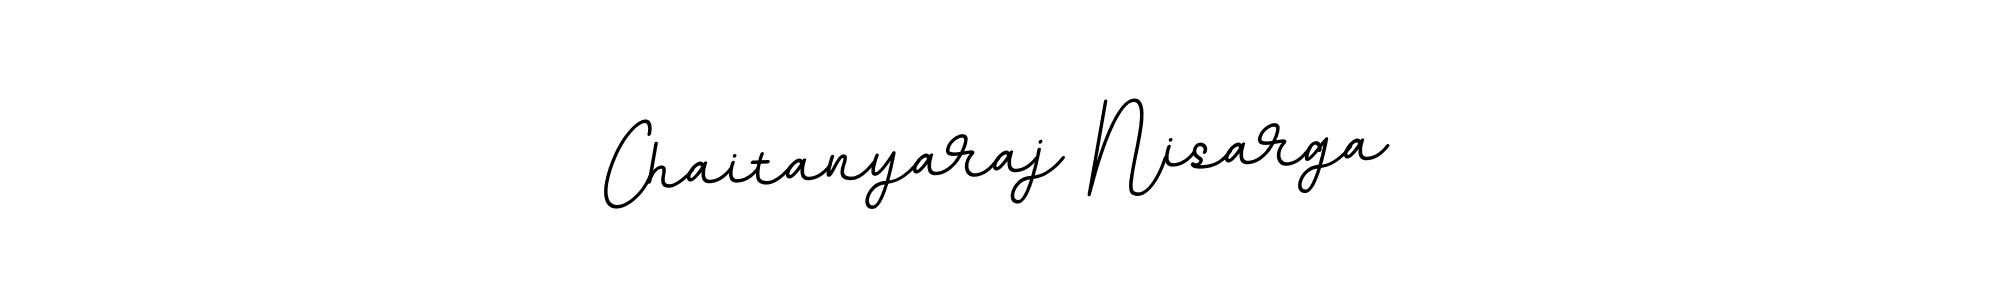 How to Draw Chaitanyaraj Nisarga signature style? BallpointsItalic-DORy9 is a latest design signature styles for name Chaitanyaraj Nisarga. Chaitanyaraj Nisarga signature style 11 images and pictures png